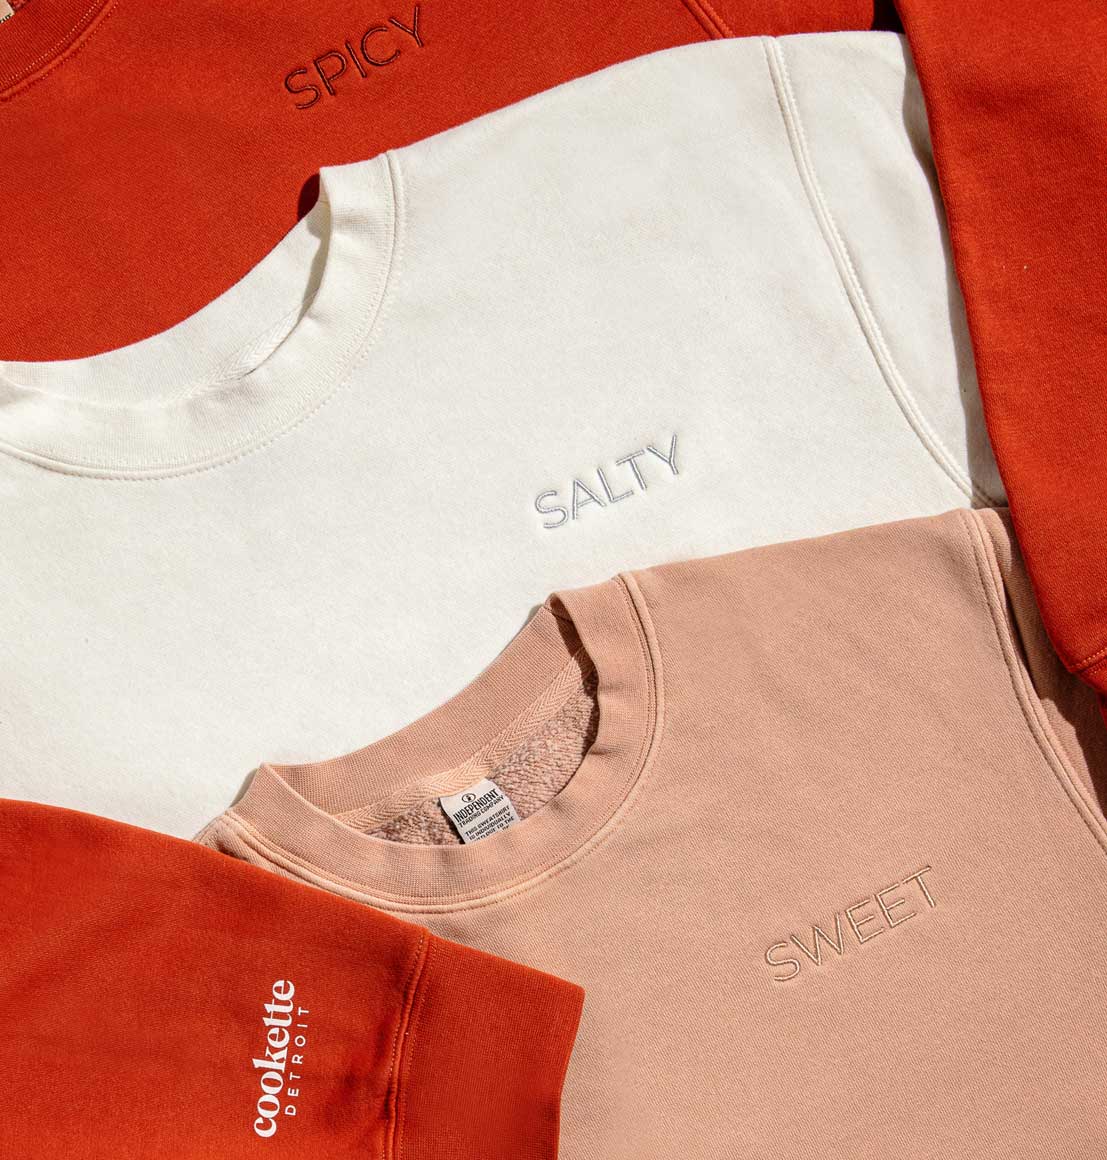 All three flavor mood sweatshirts layered together: Spicy, Salty, Sweet